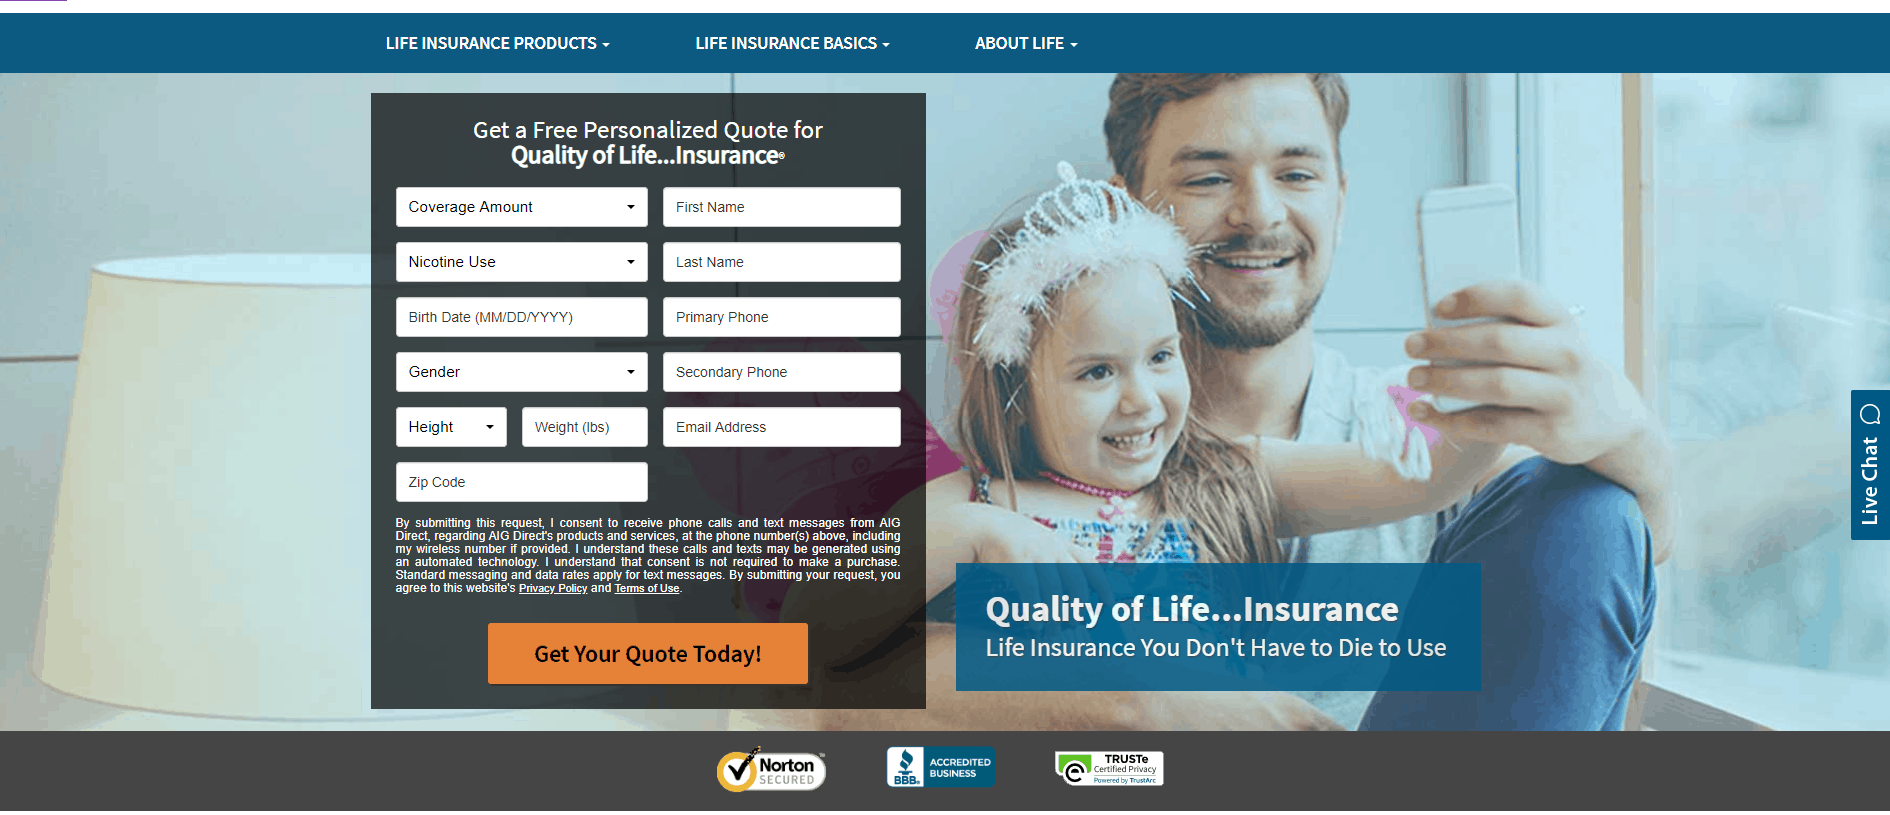 Best Life Insurance for Adult Children: AIG